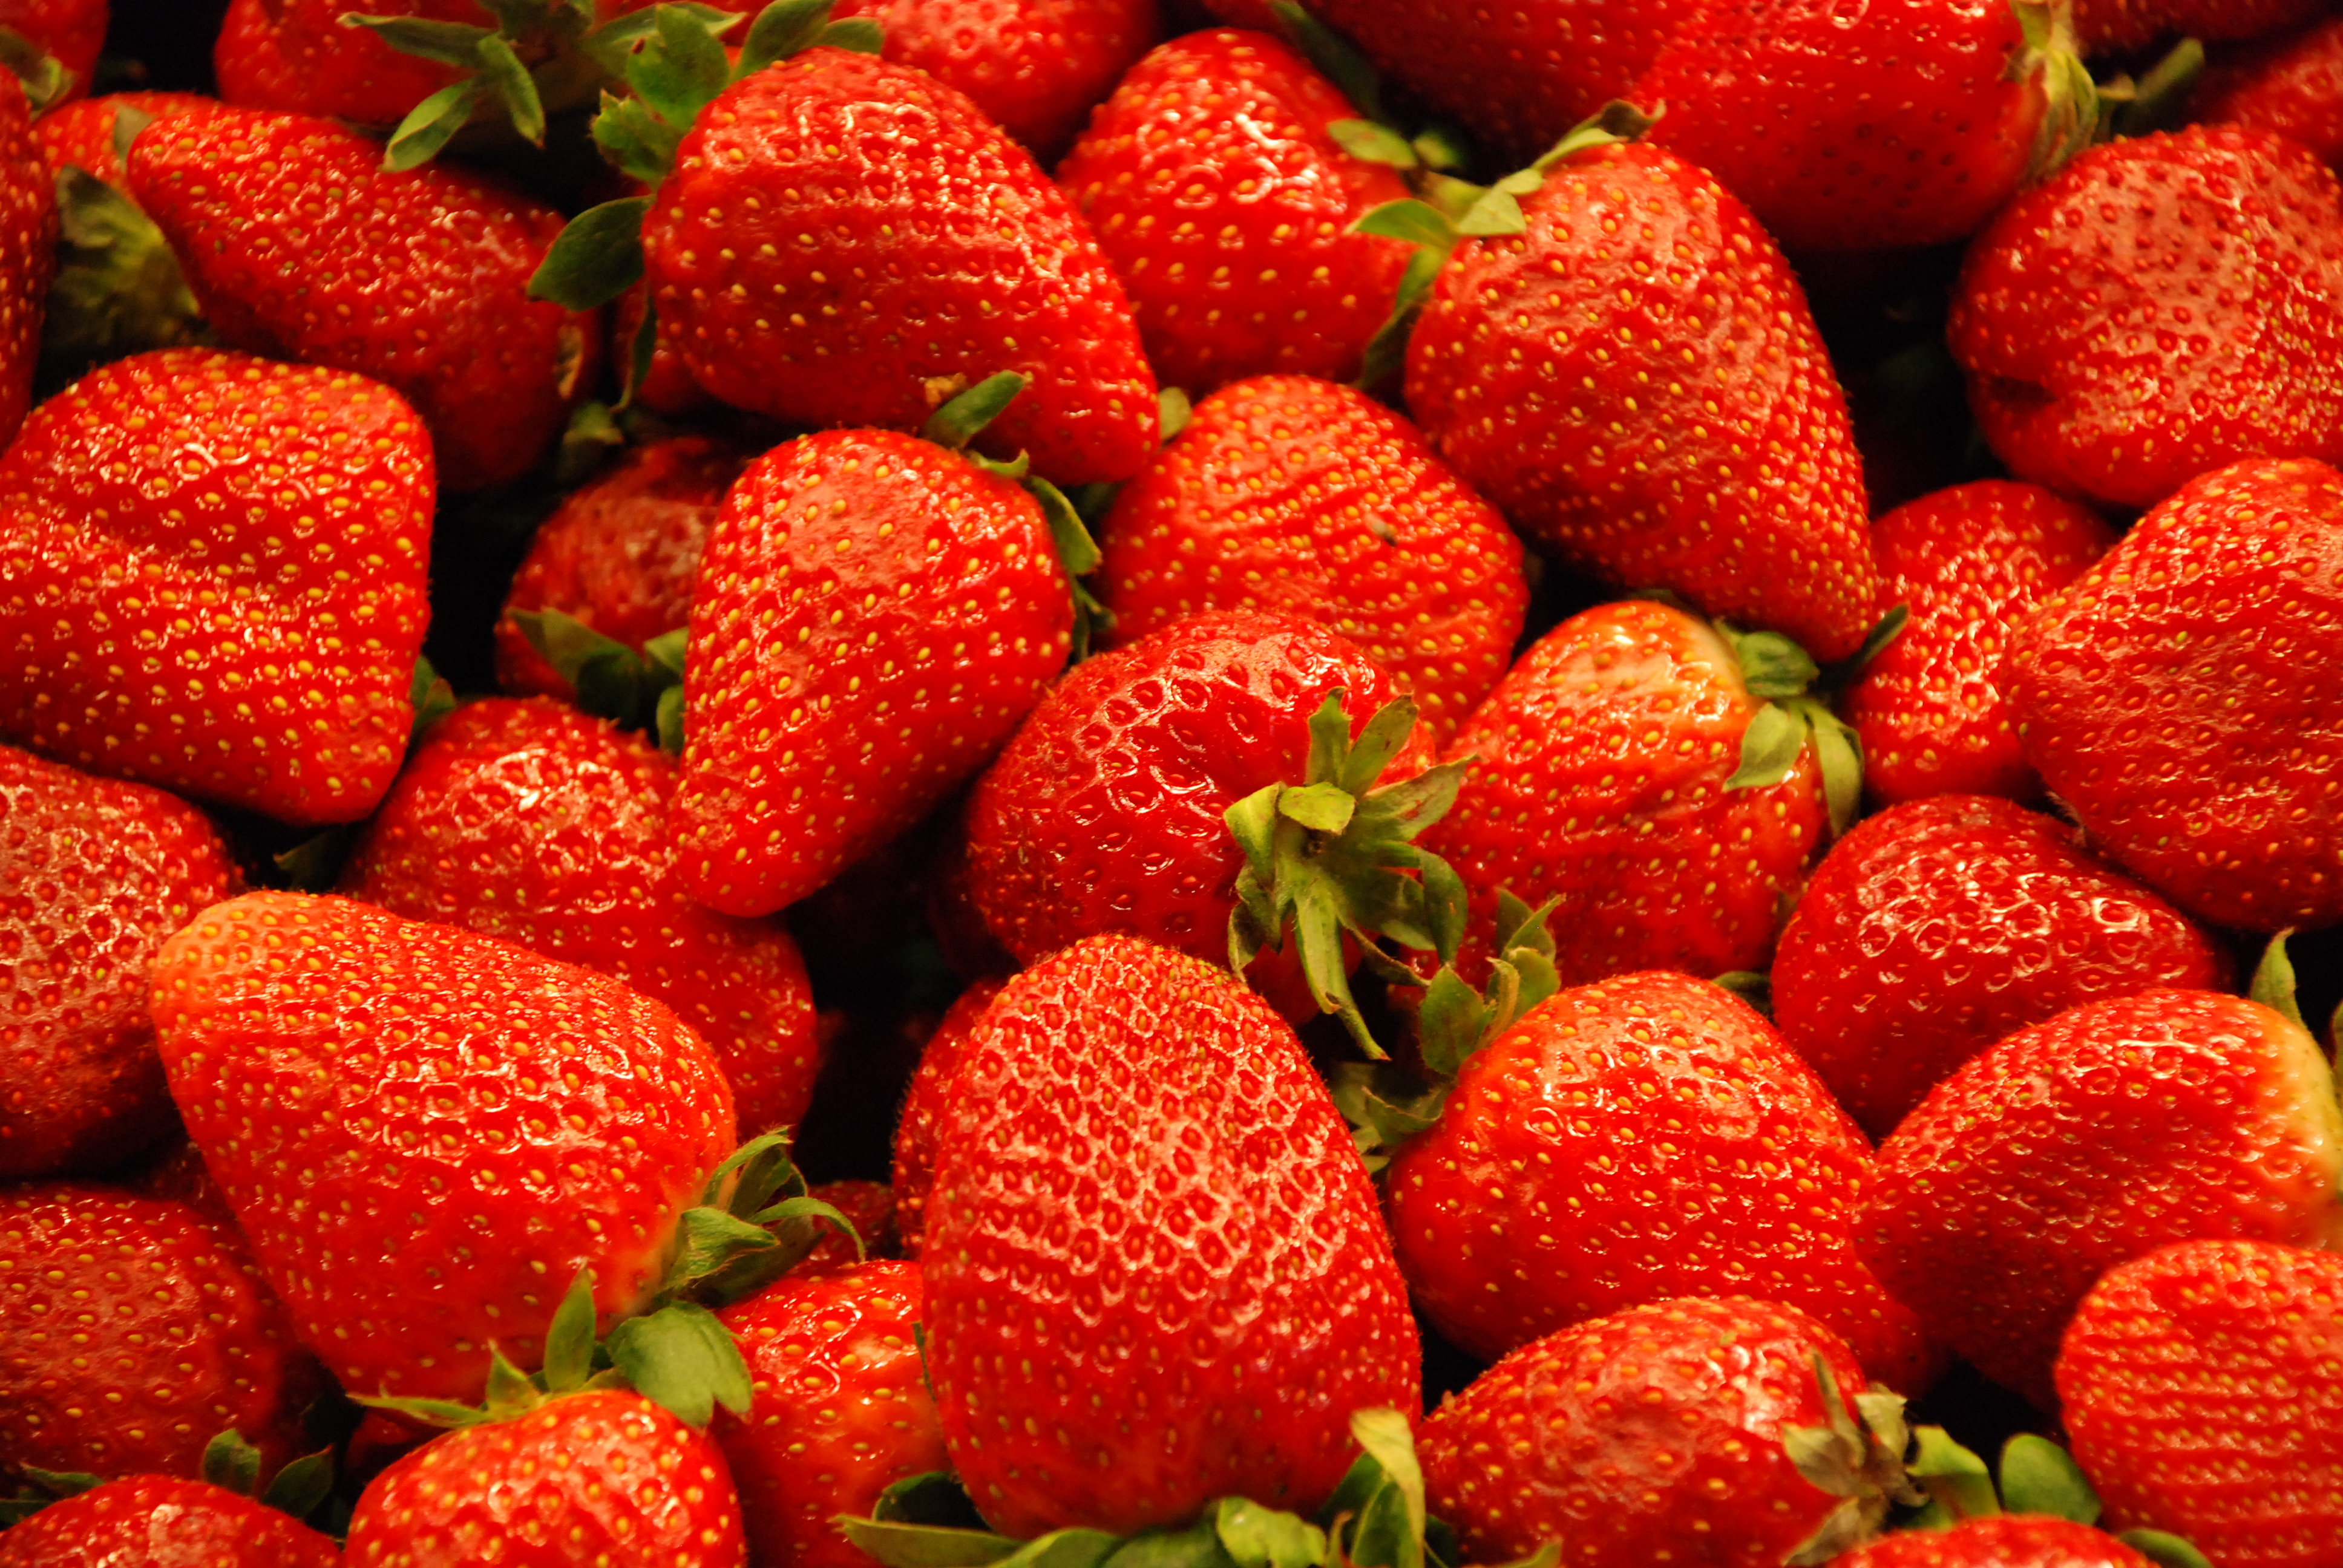 Strawberries at St. Joseph Market in Barcelona